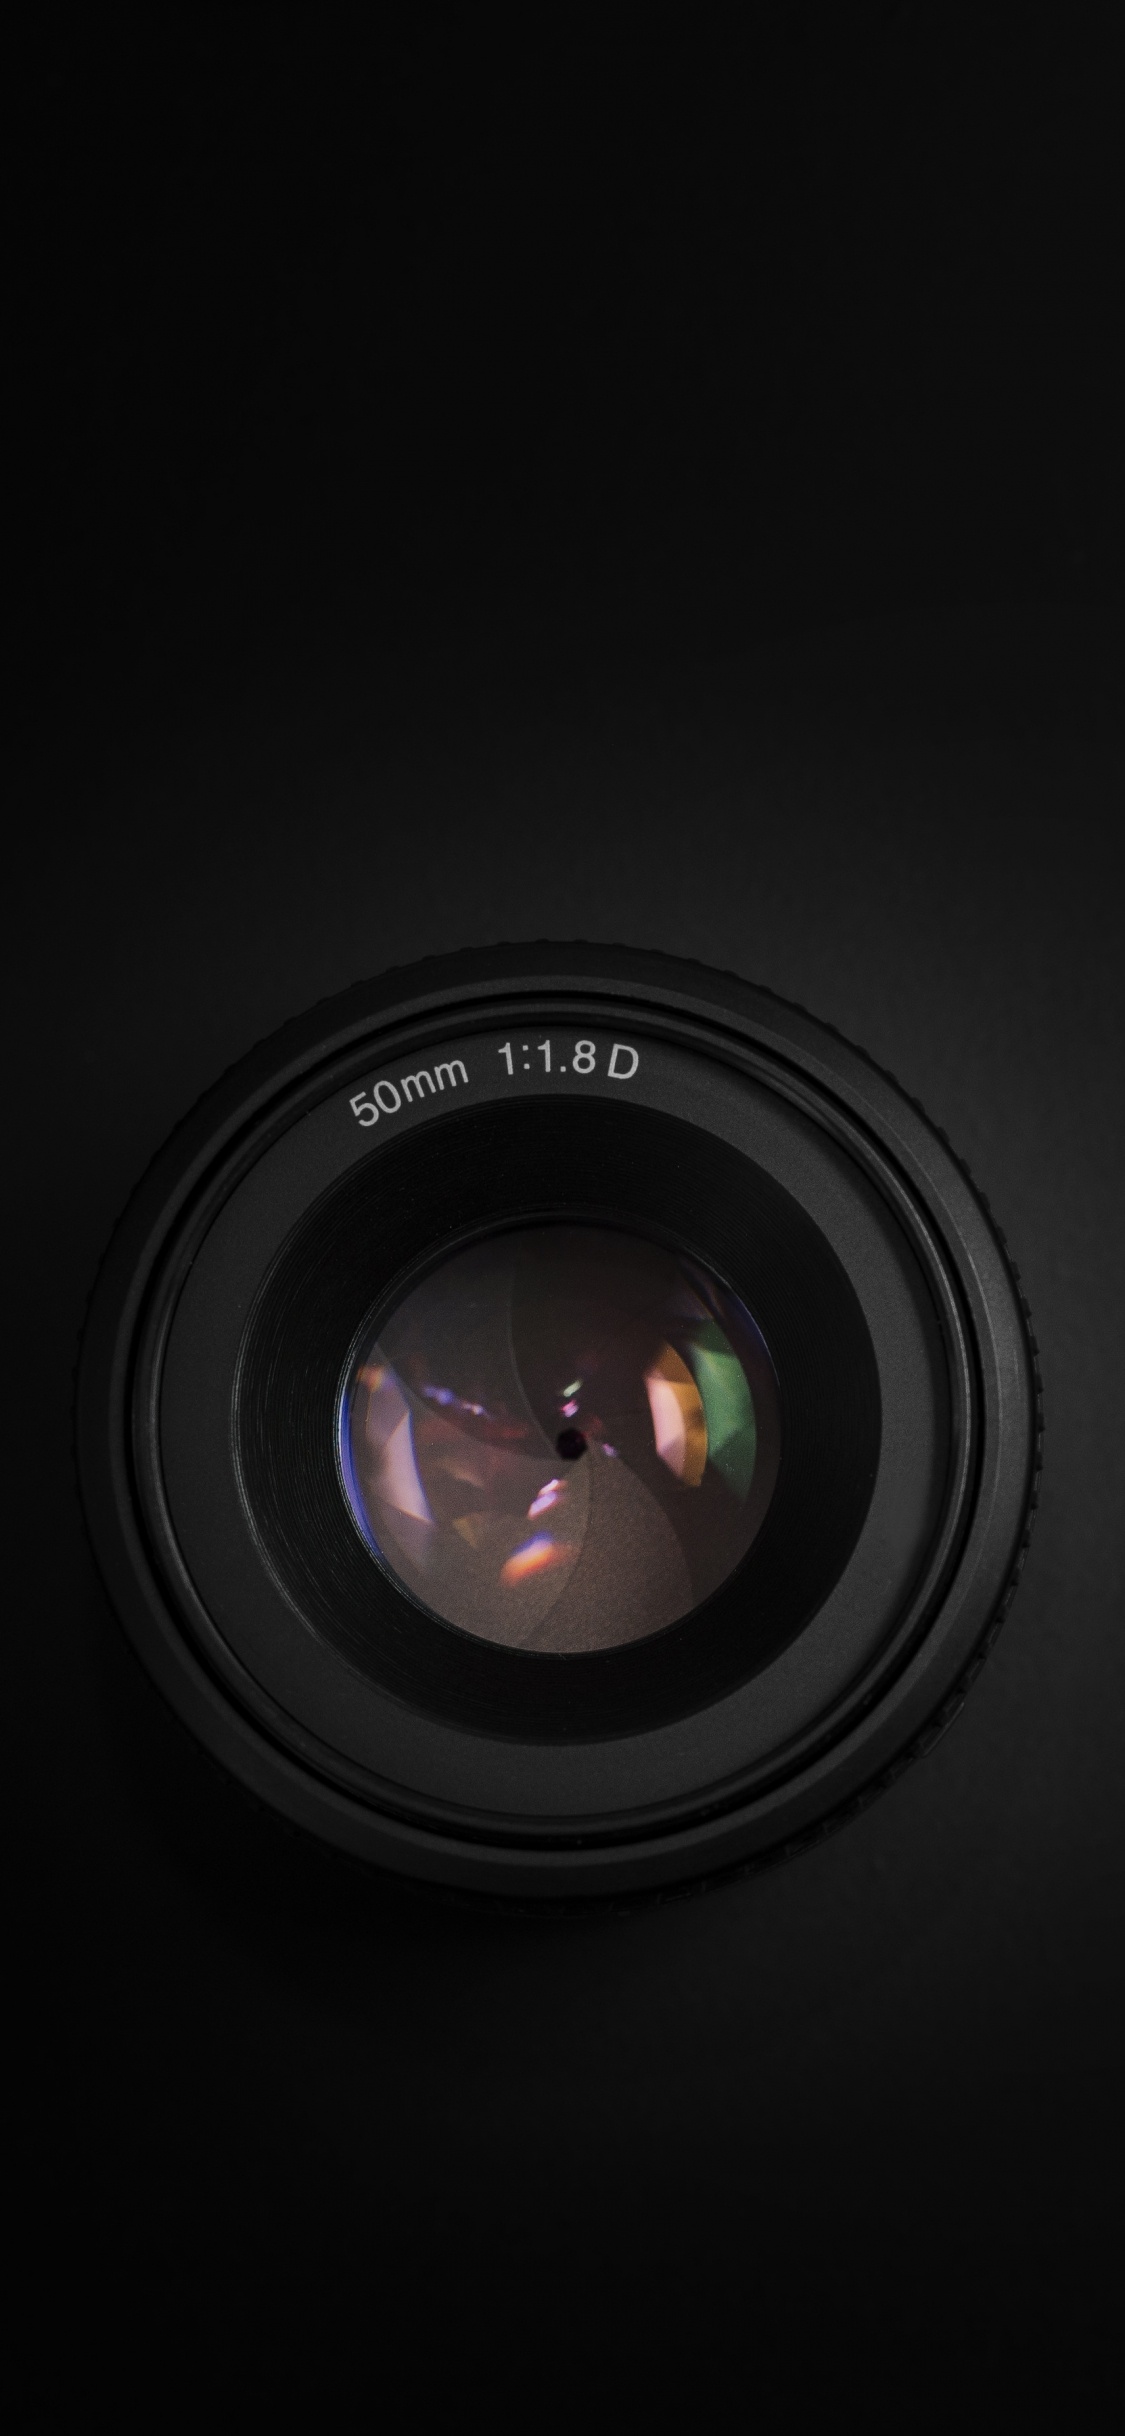 Black Camera Lens on Black Surface. Wallpaper in 1125x2436 Resolution